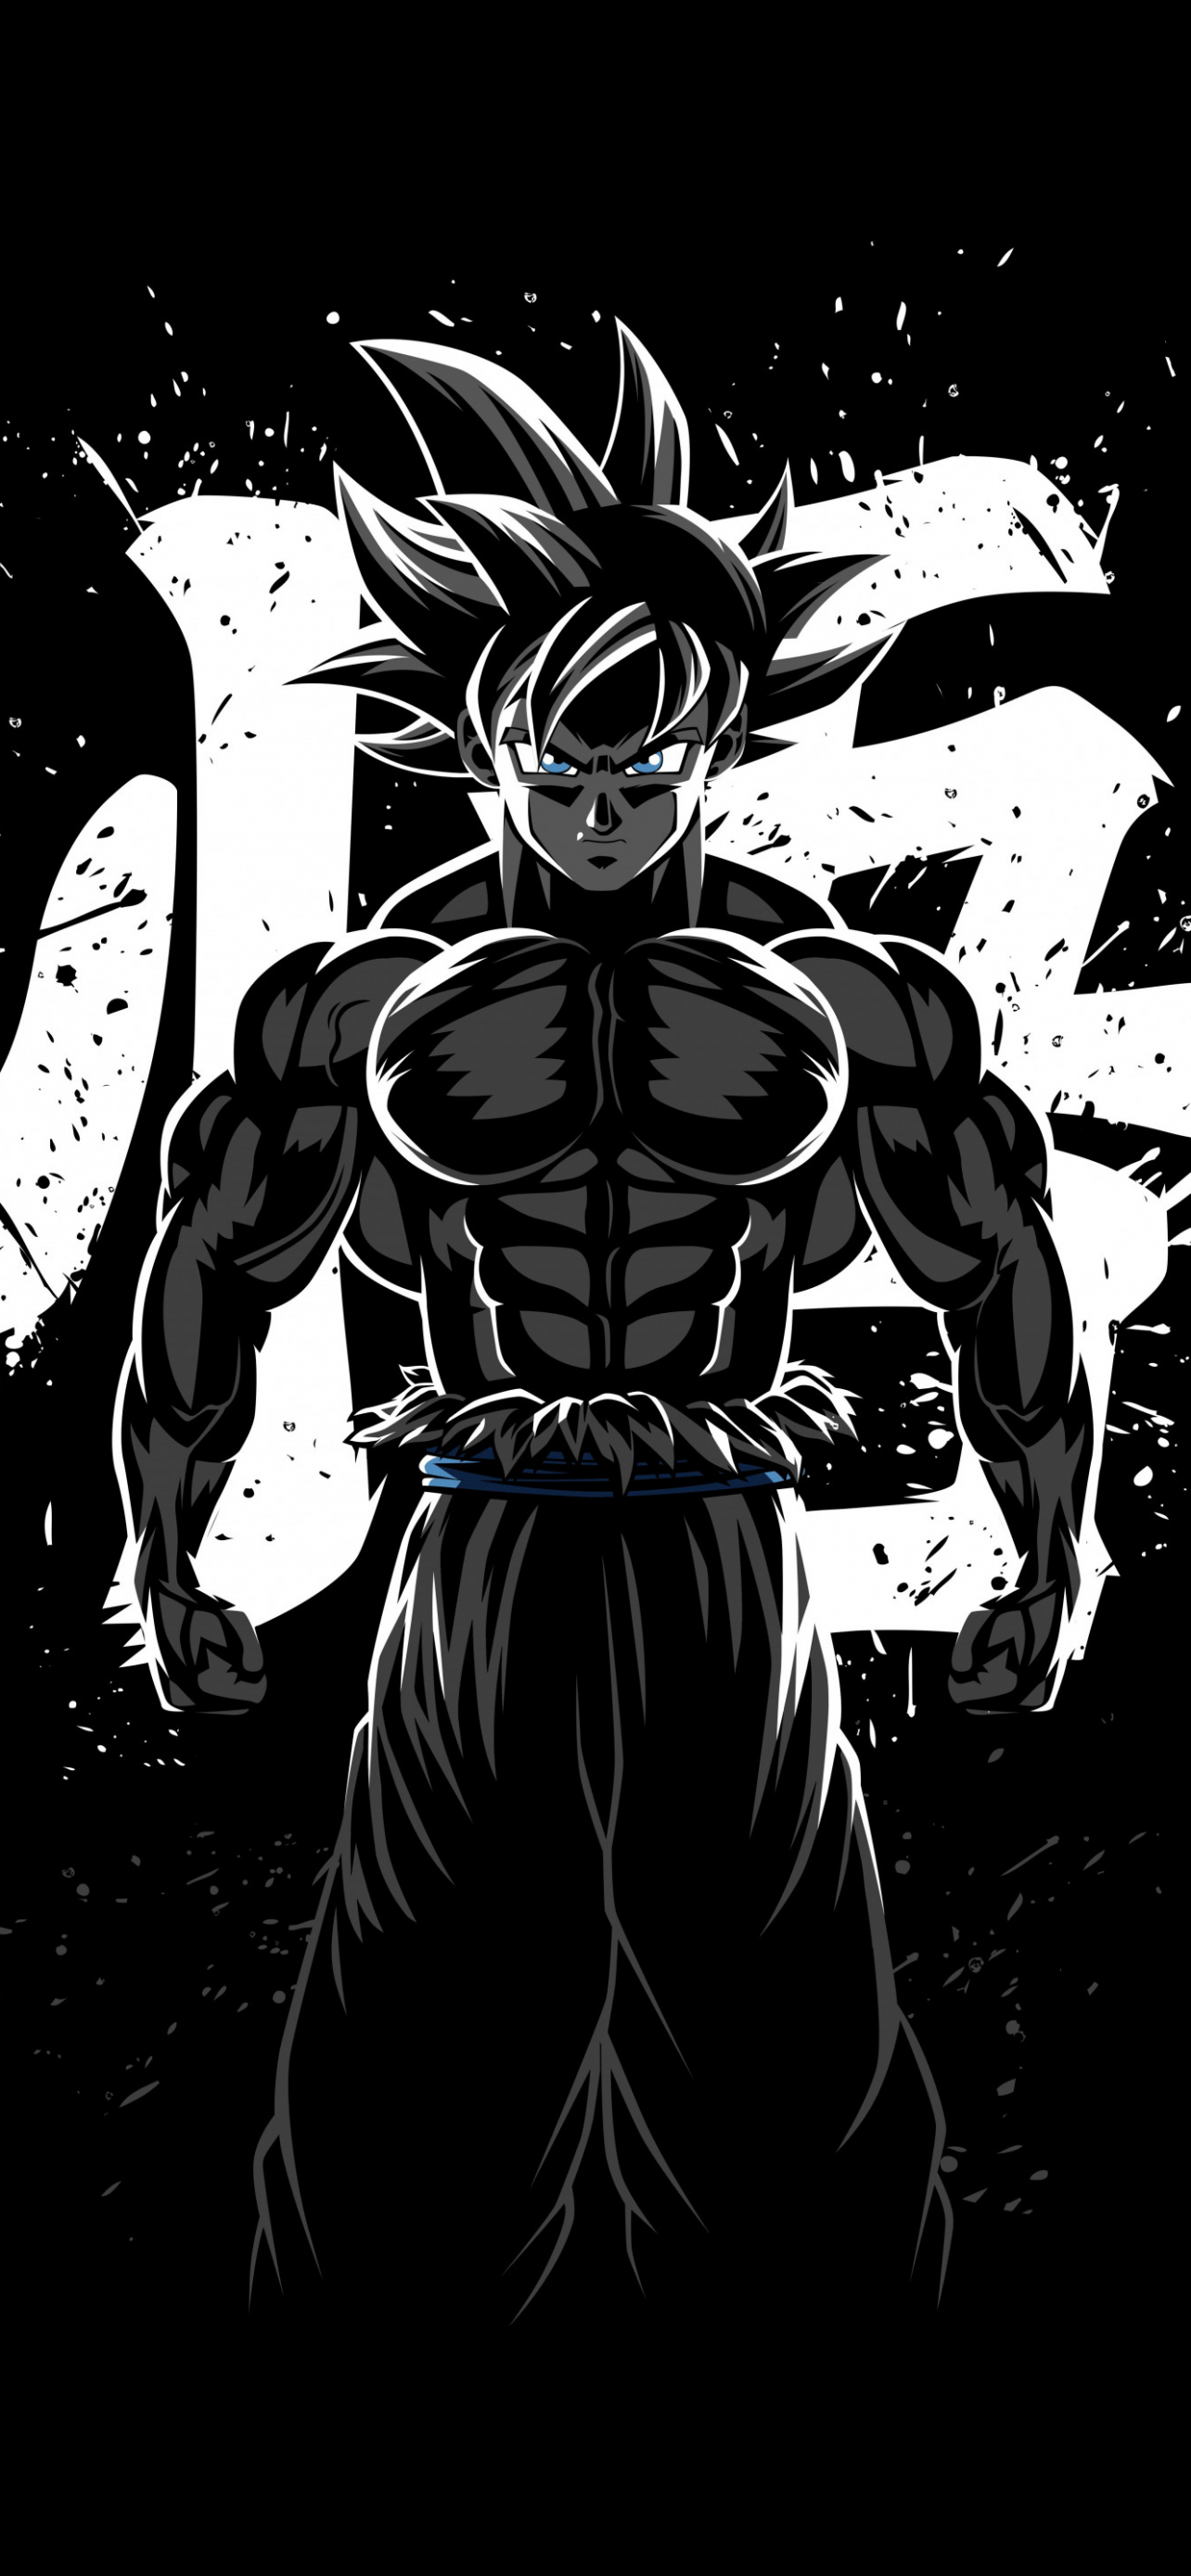 Goku Musculoso Wallpaper 4K, Dragon Ball Z, AMOLED, Minimal, Black Background, Black Dark